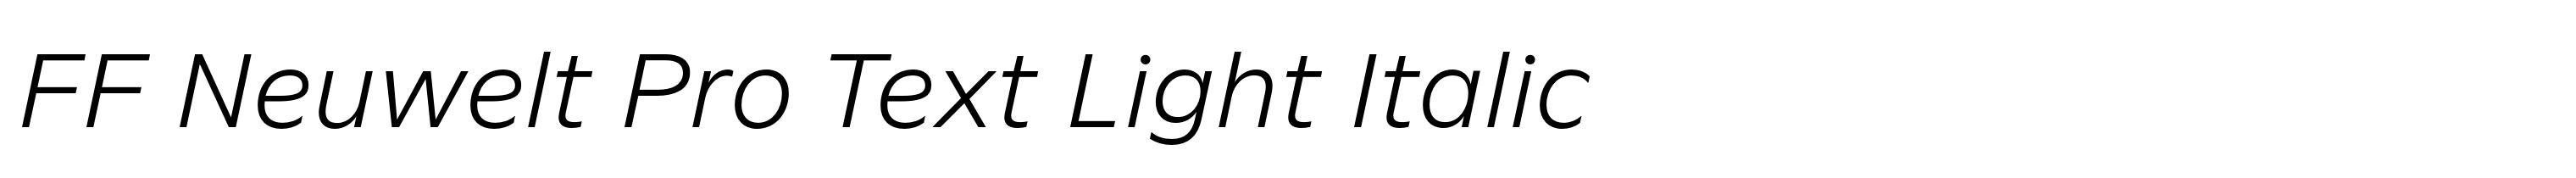 FF Neuwelt Pro Text Light Italic